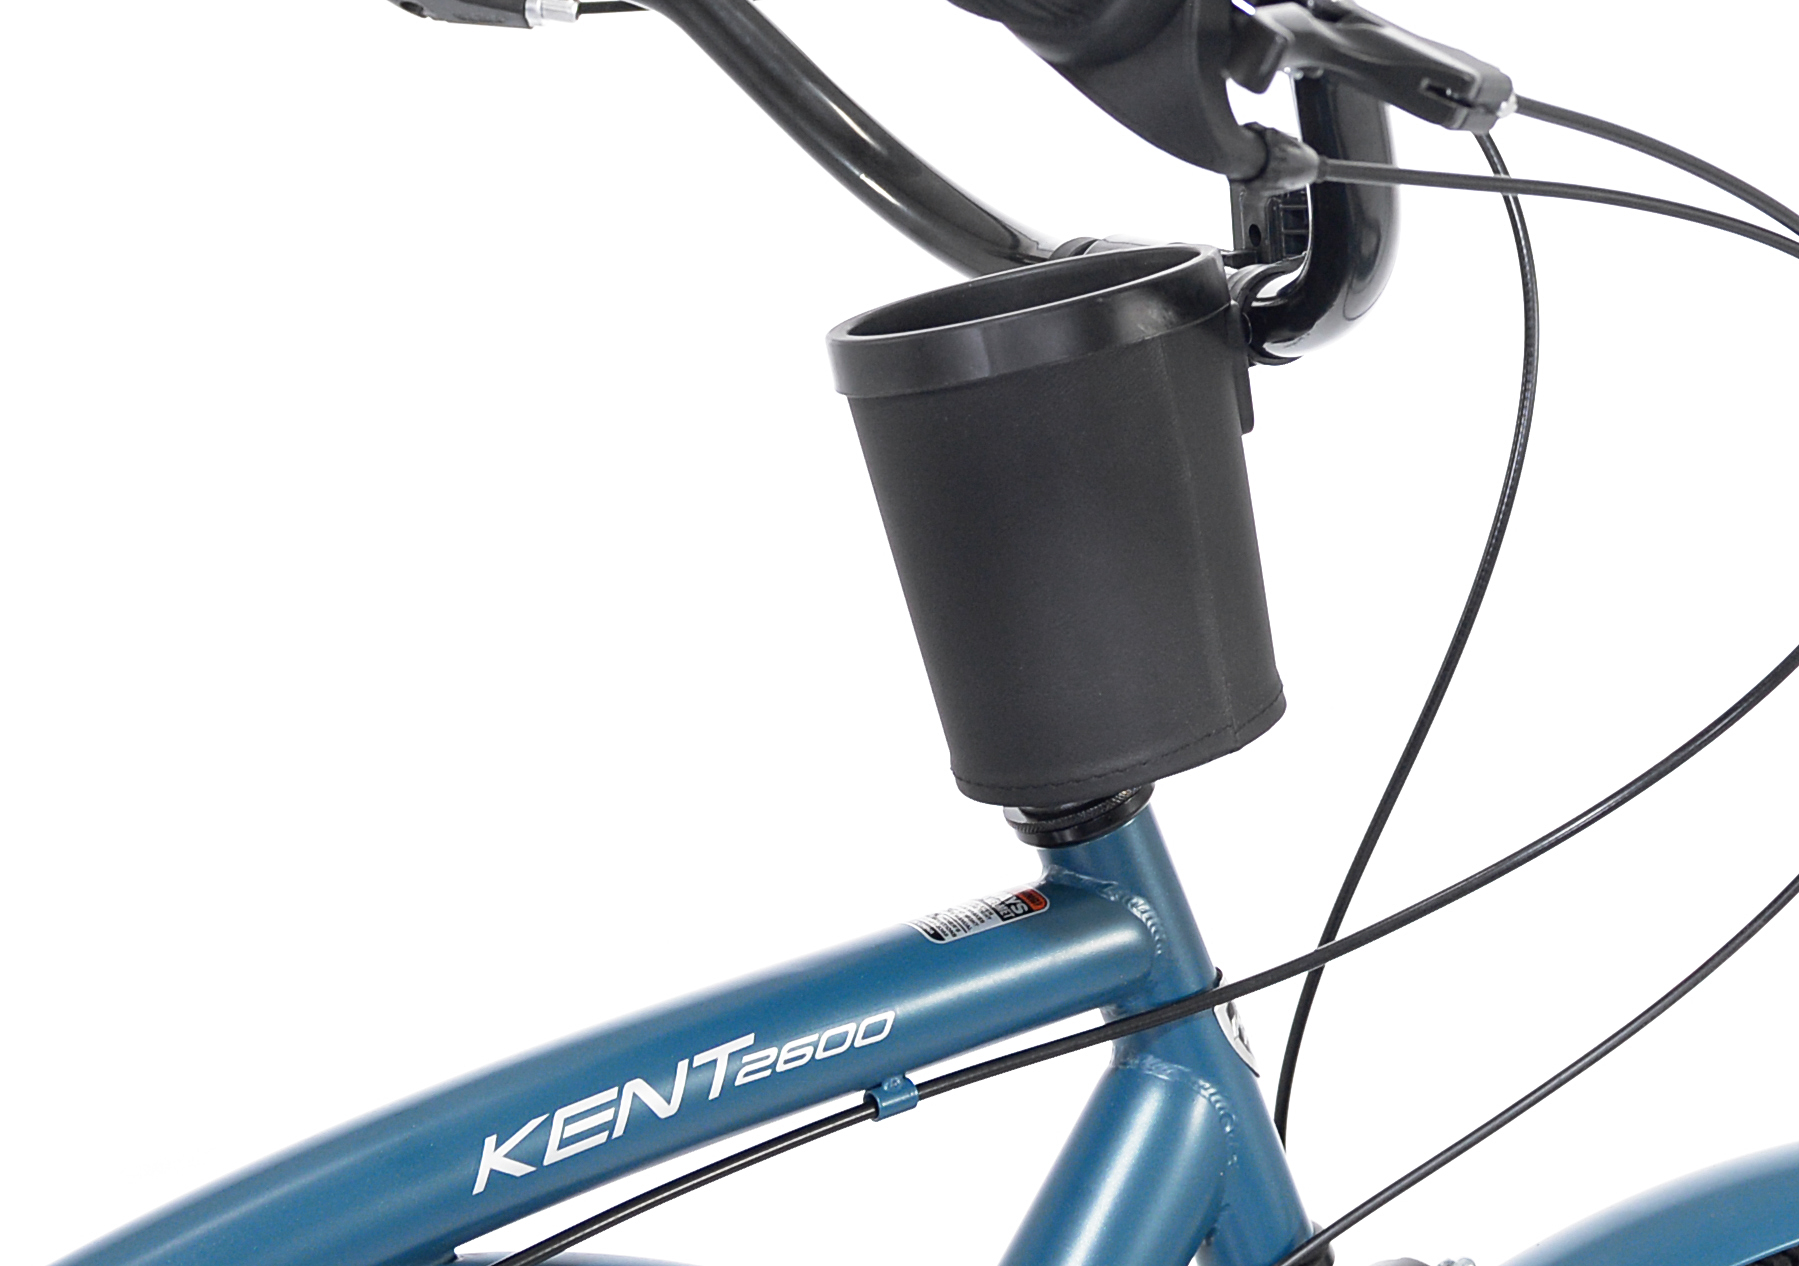 Kent Bicycle 26-inch Bayside Men's Cruiser Bicycle, Blue - image 2 of 8